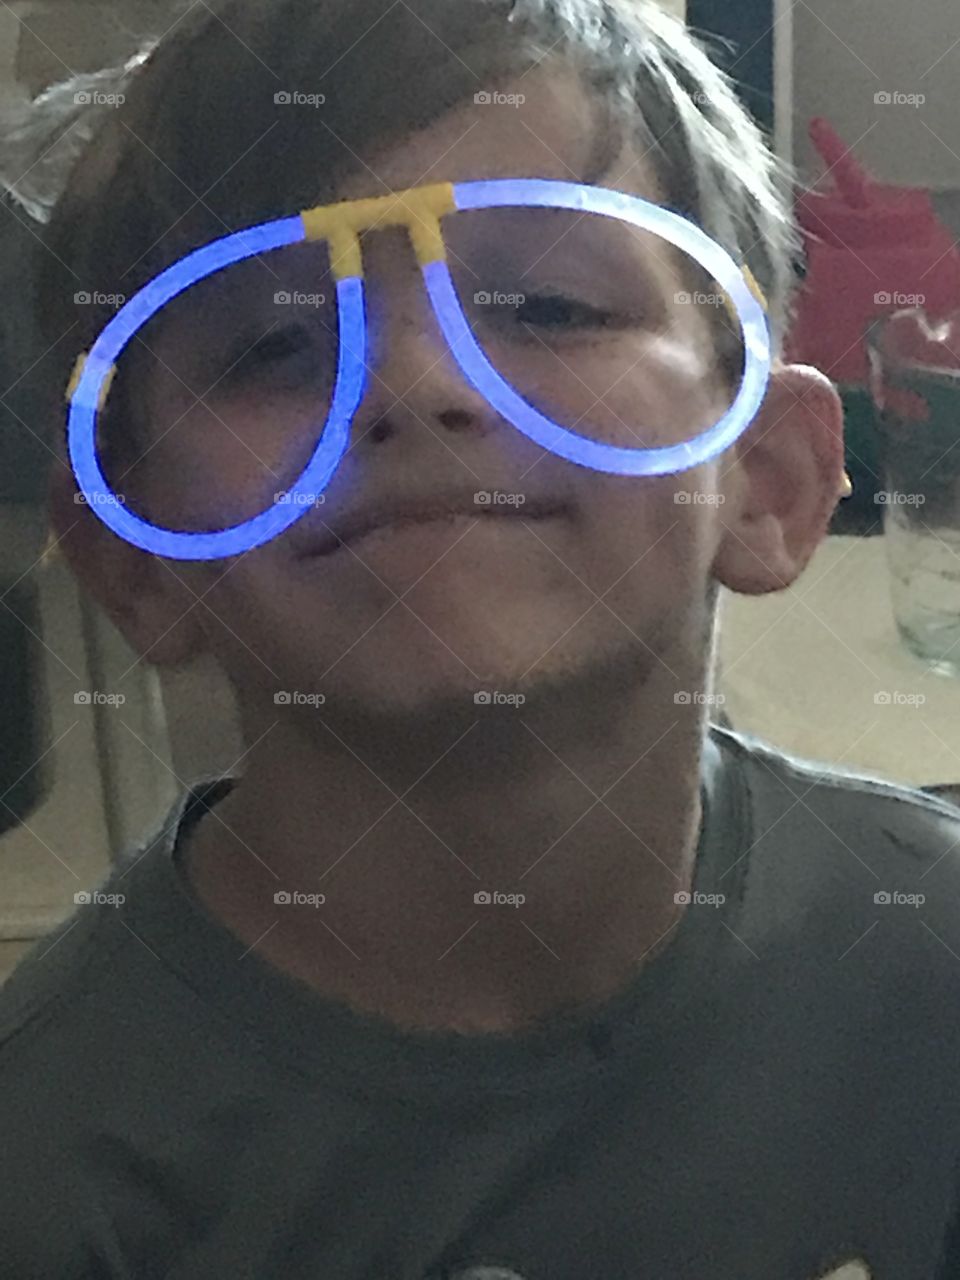 Glow stick eyeglasses on young boy.